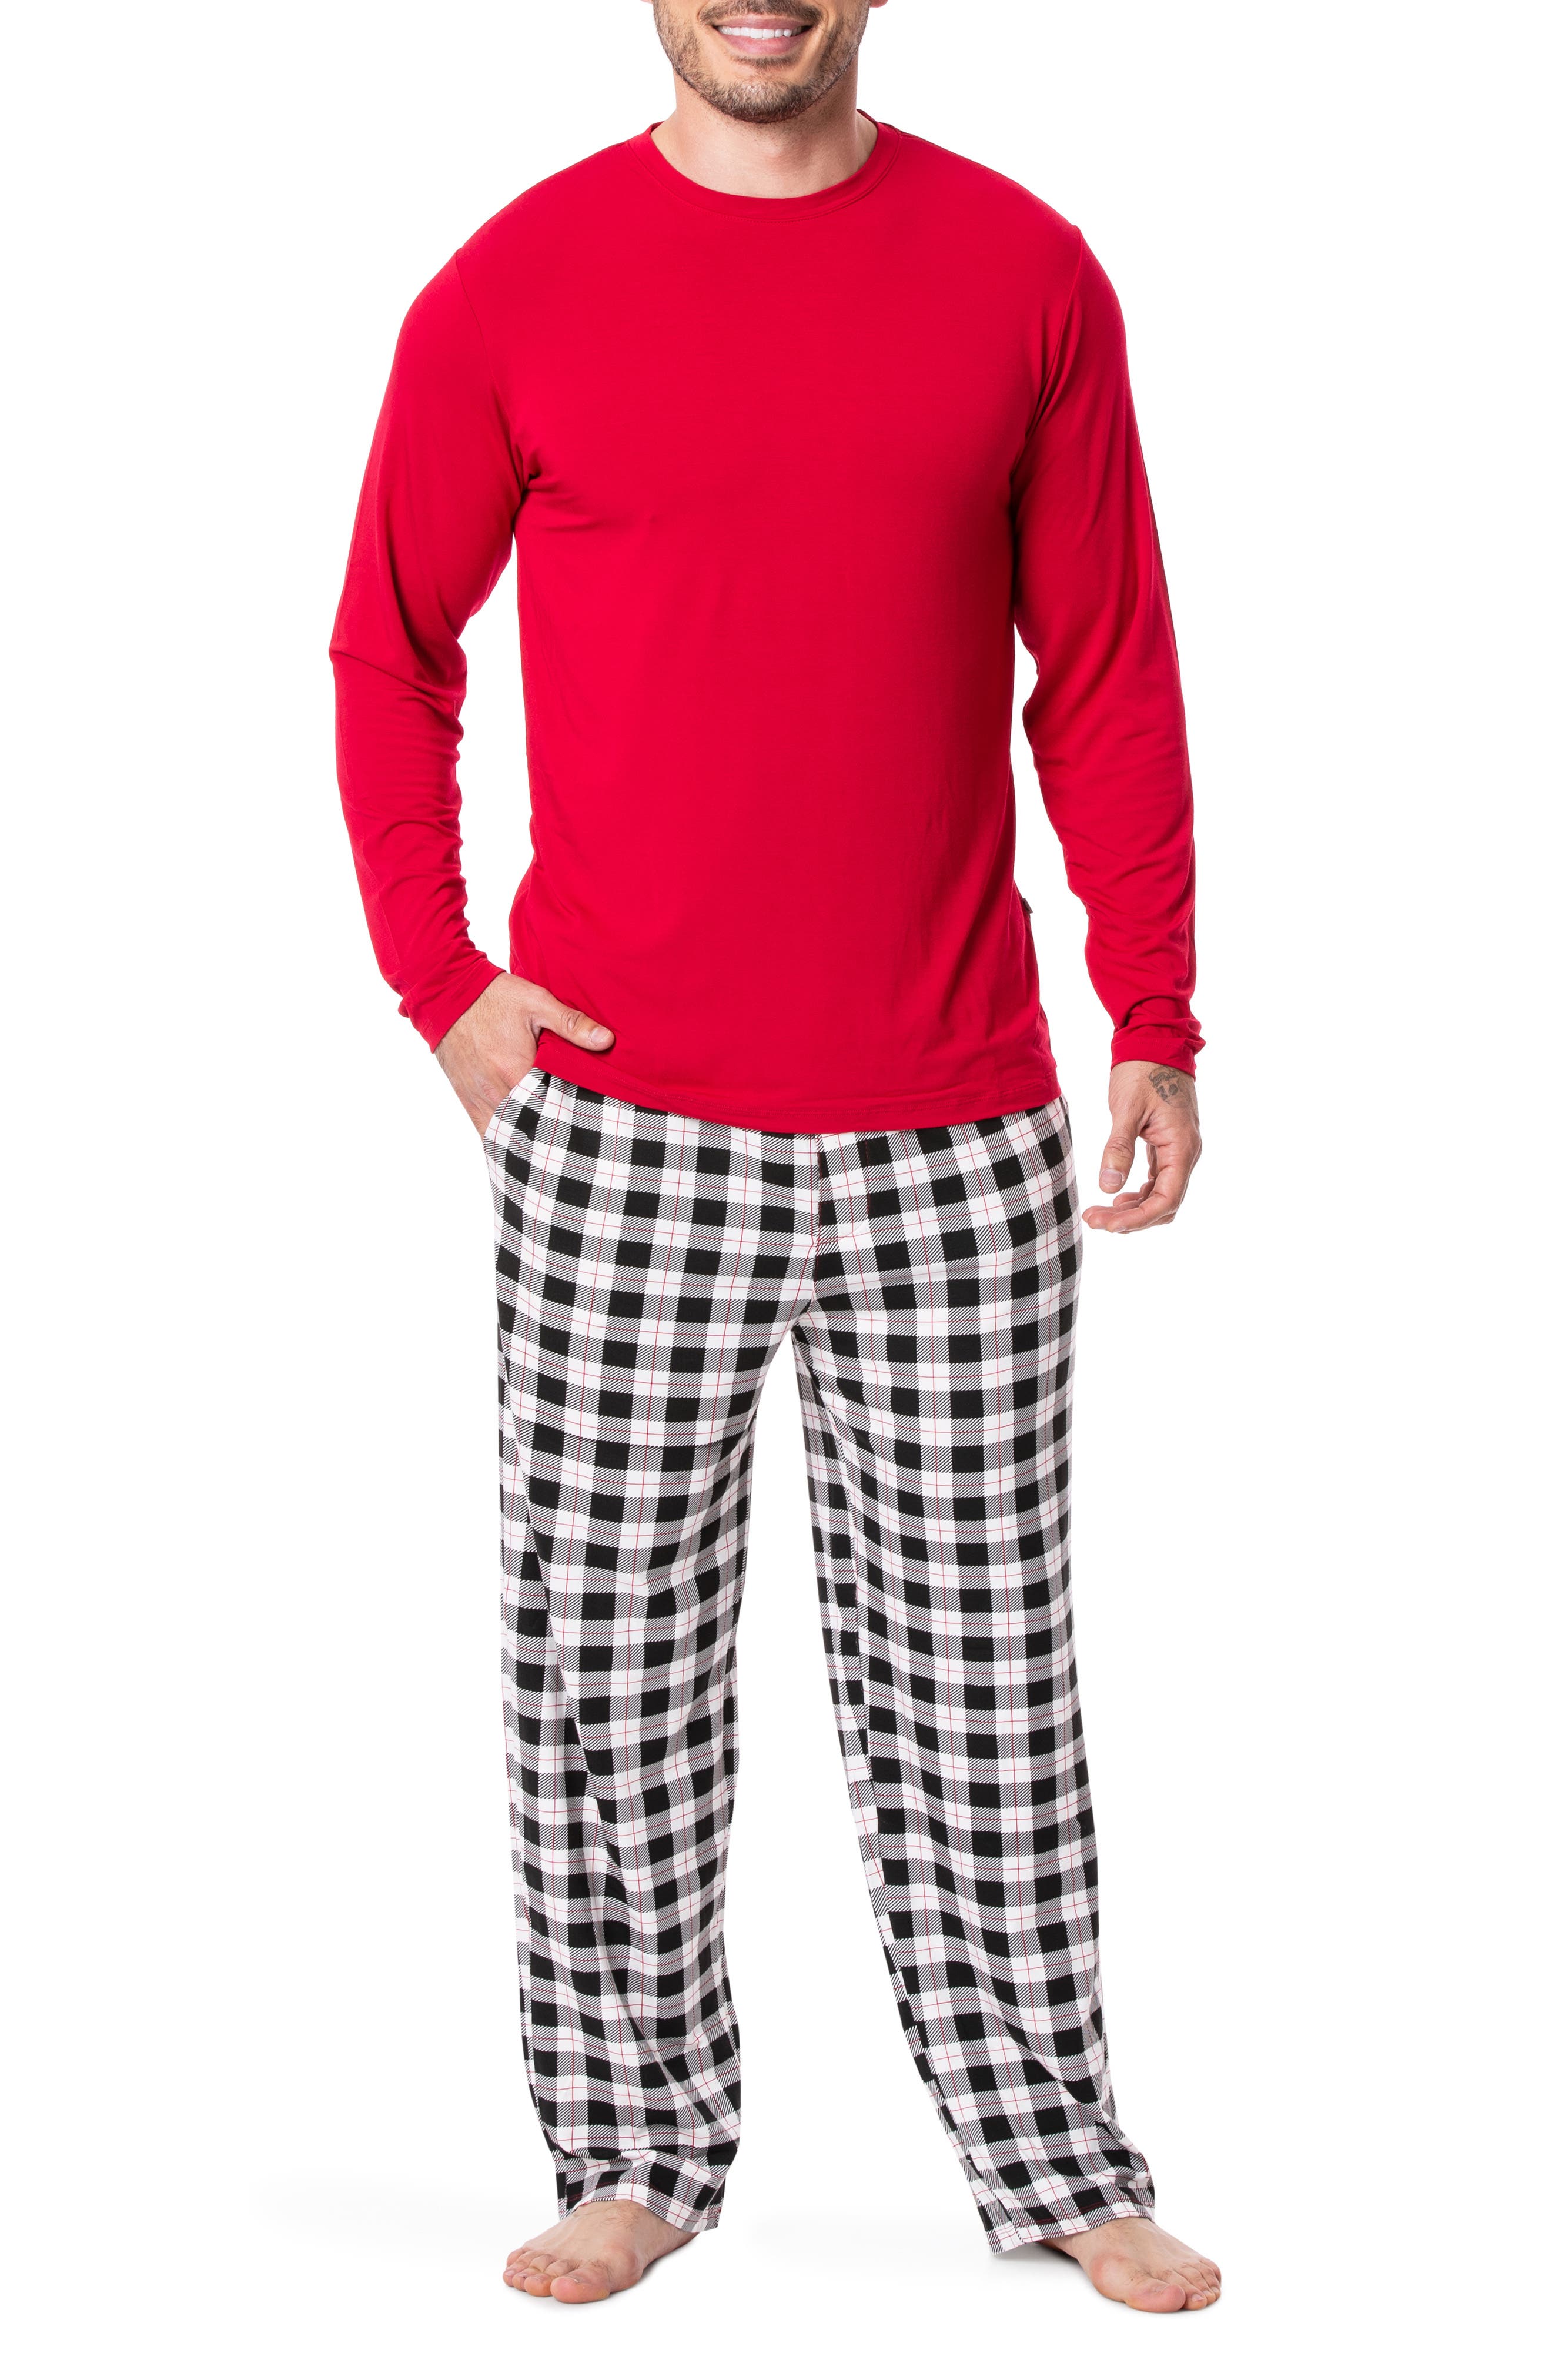 KicKee Pants Relaxed Fit Pajamas in Holiday 2021 Plaid at Nordstrom